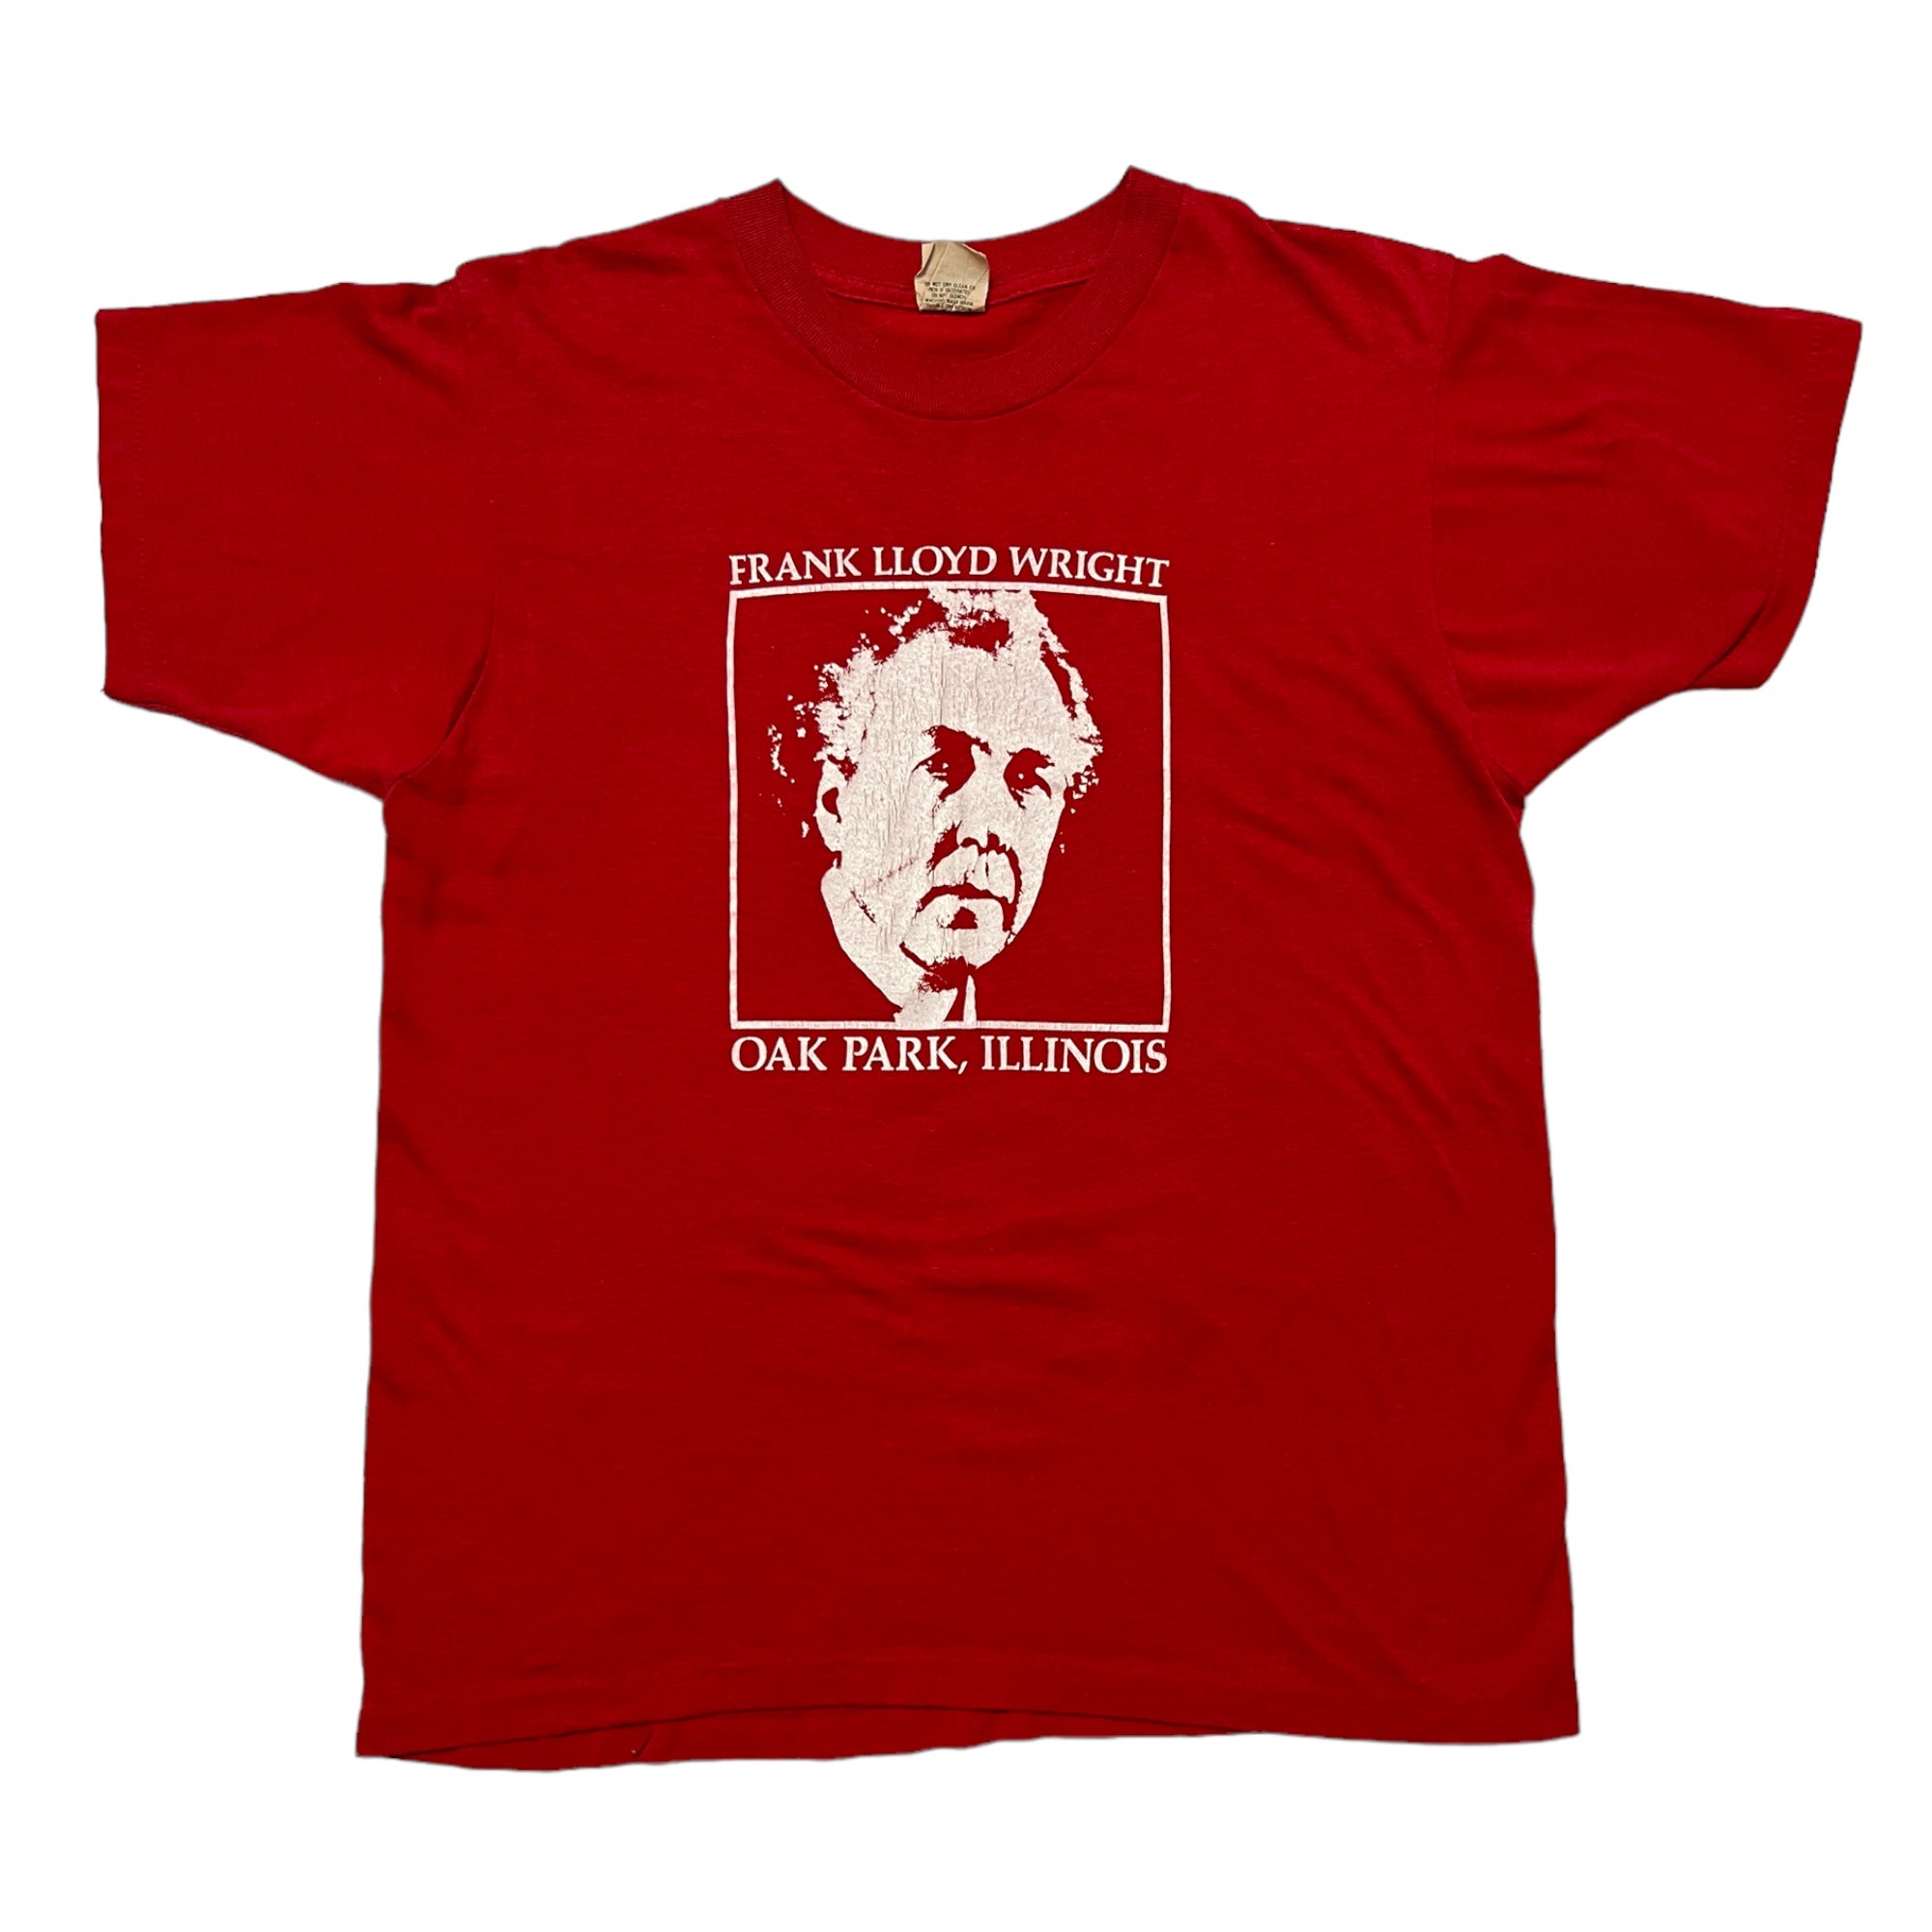 1980s/90s Frank Lloyd Wright ‘Oak Park, Illinois’ T-Shirt - Crimson Red - M